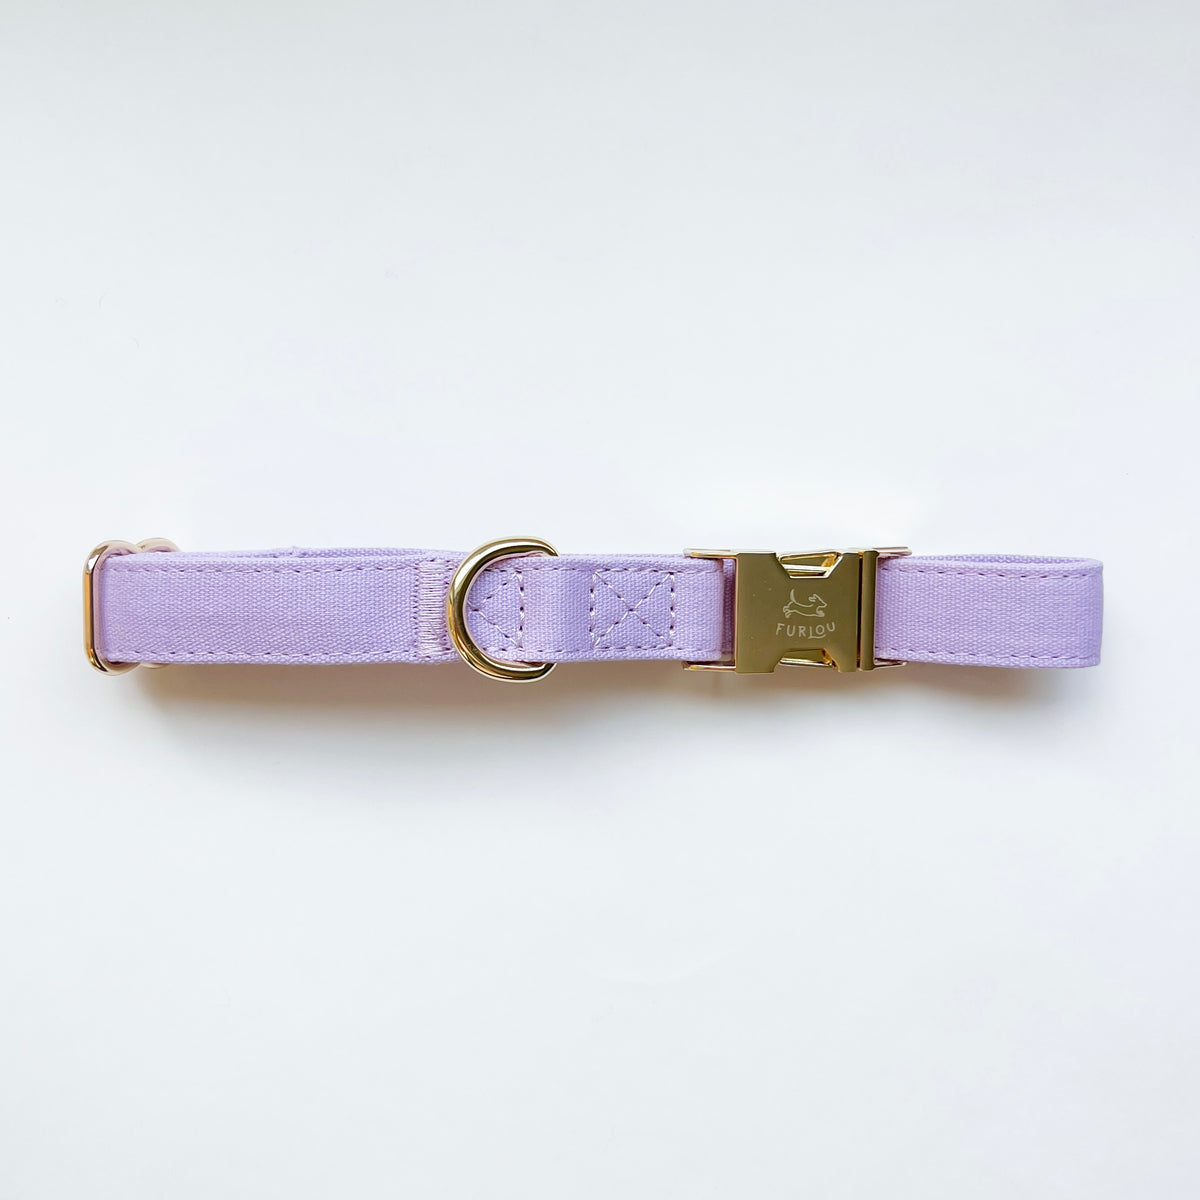 'Lavender' - Dog Collar - FURLOU 